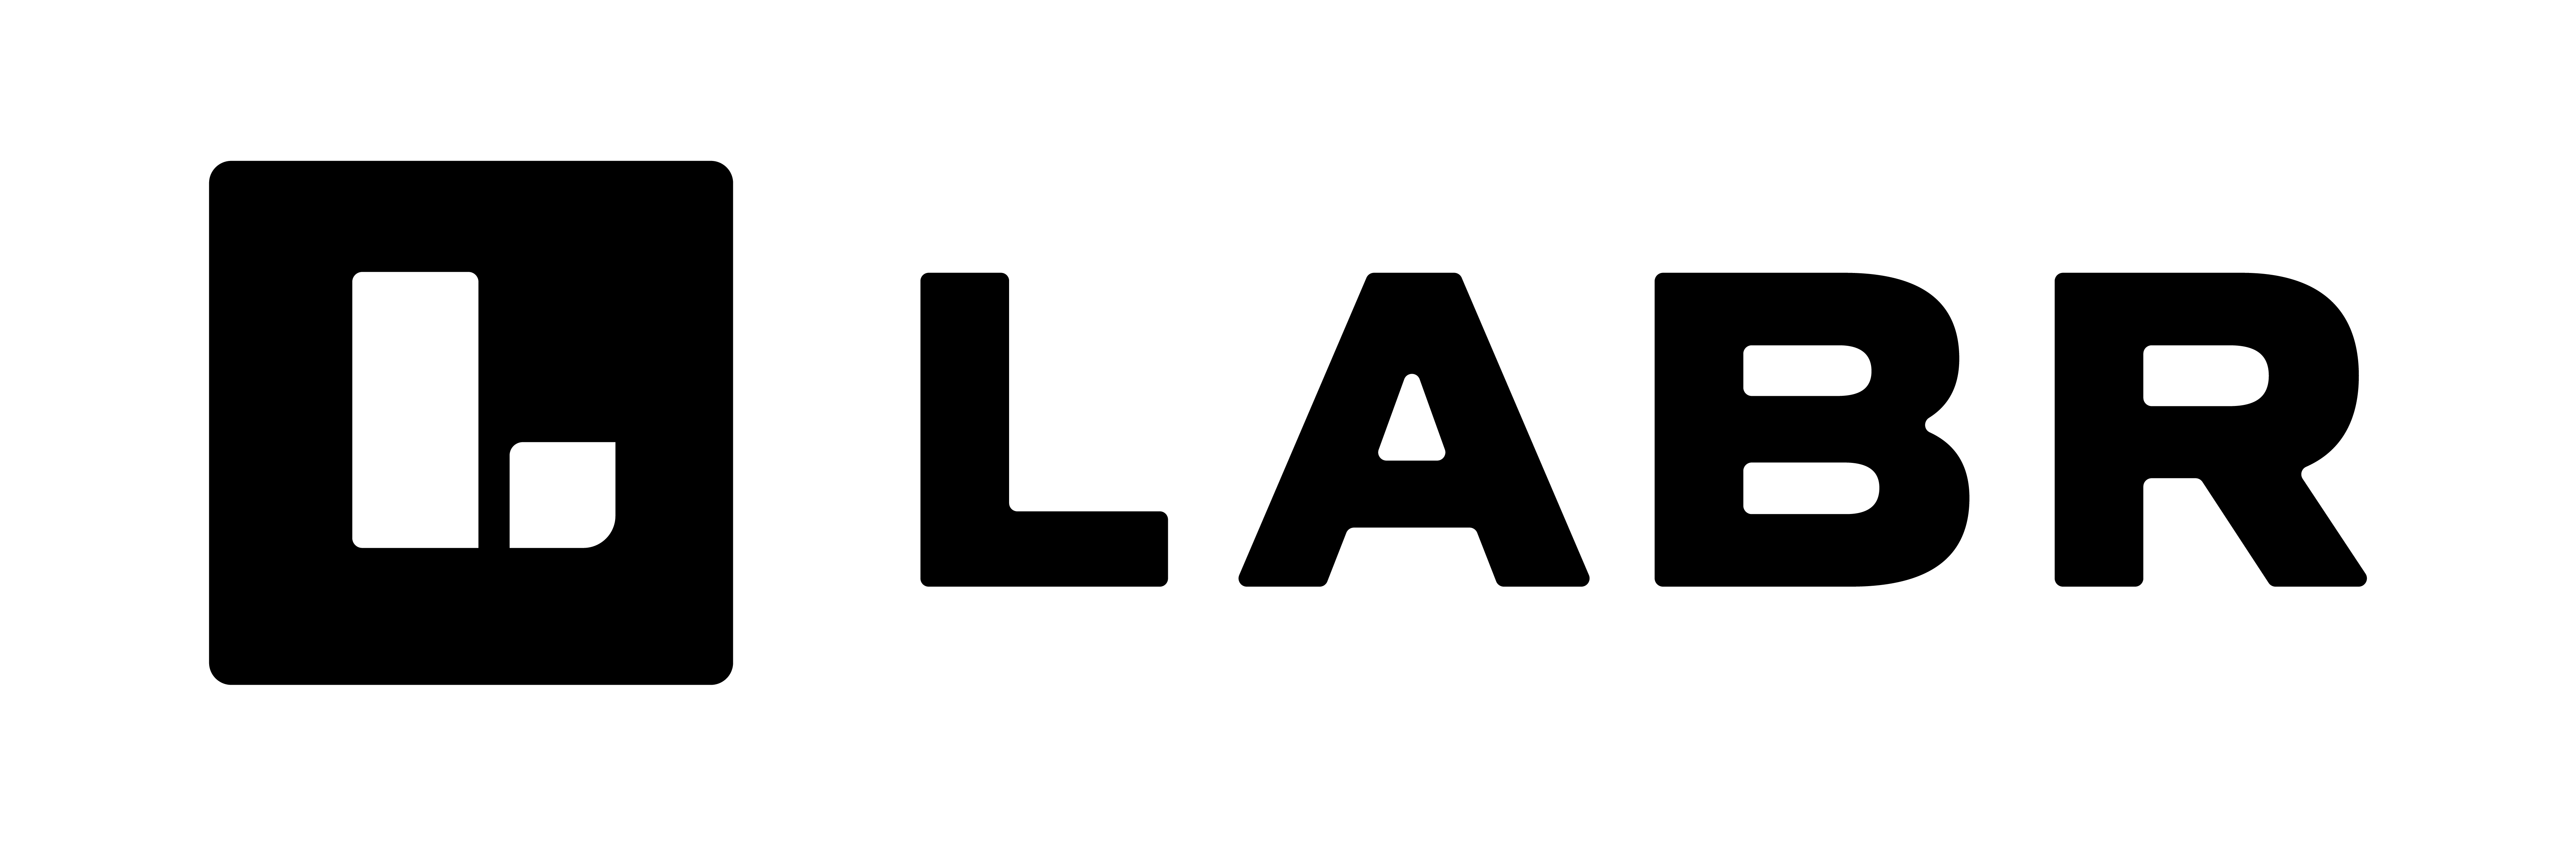 labr logo black